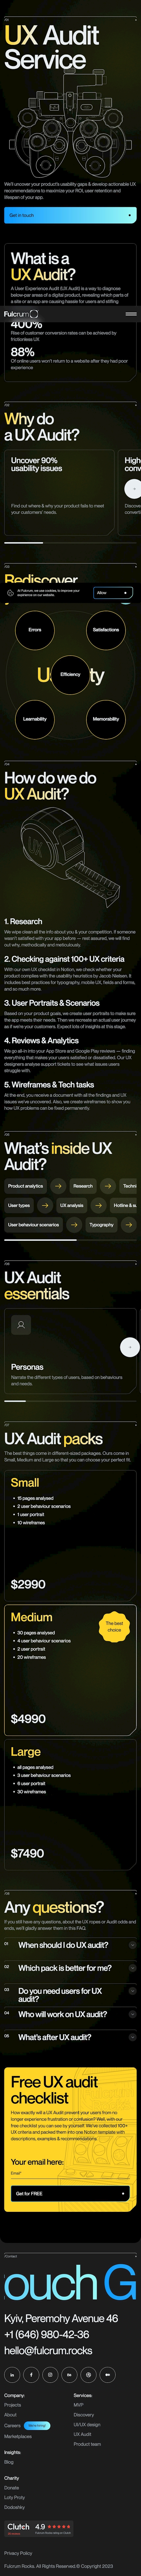 UX Audit landing page design